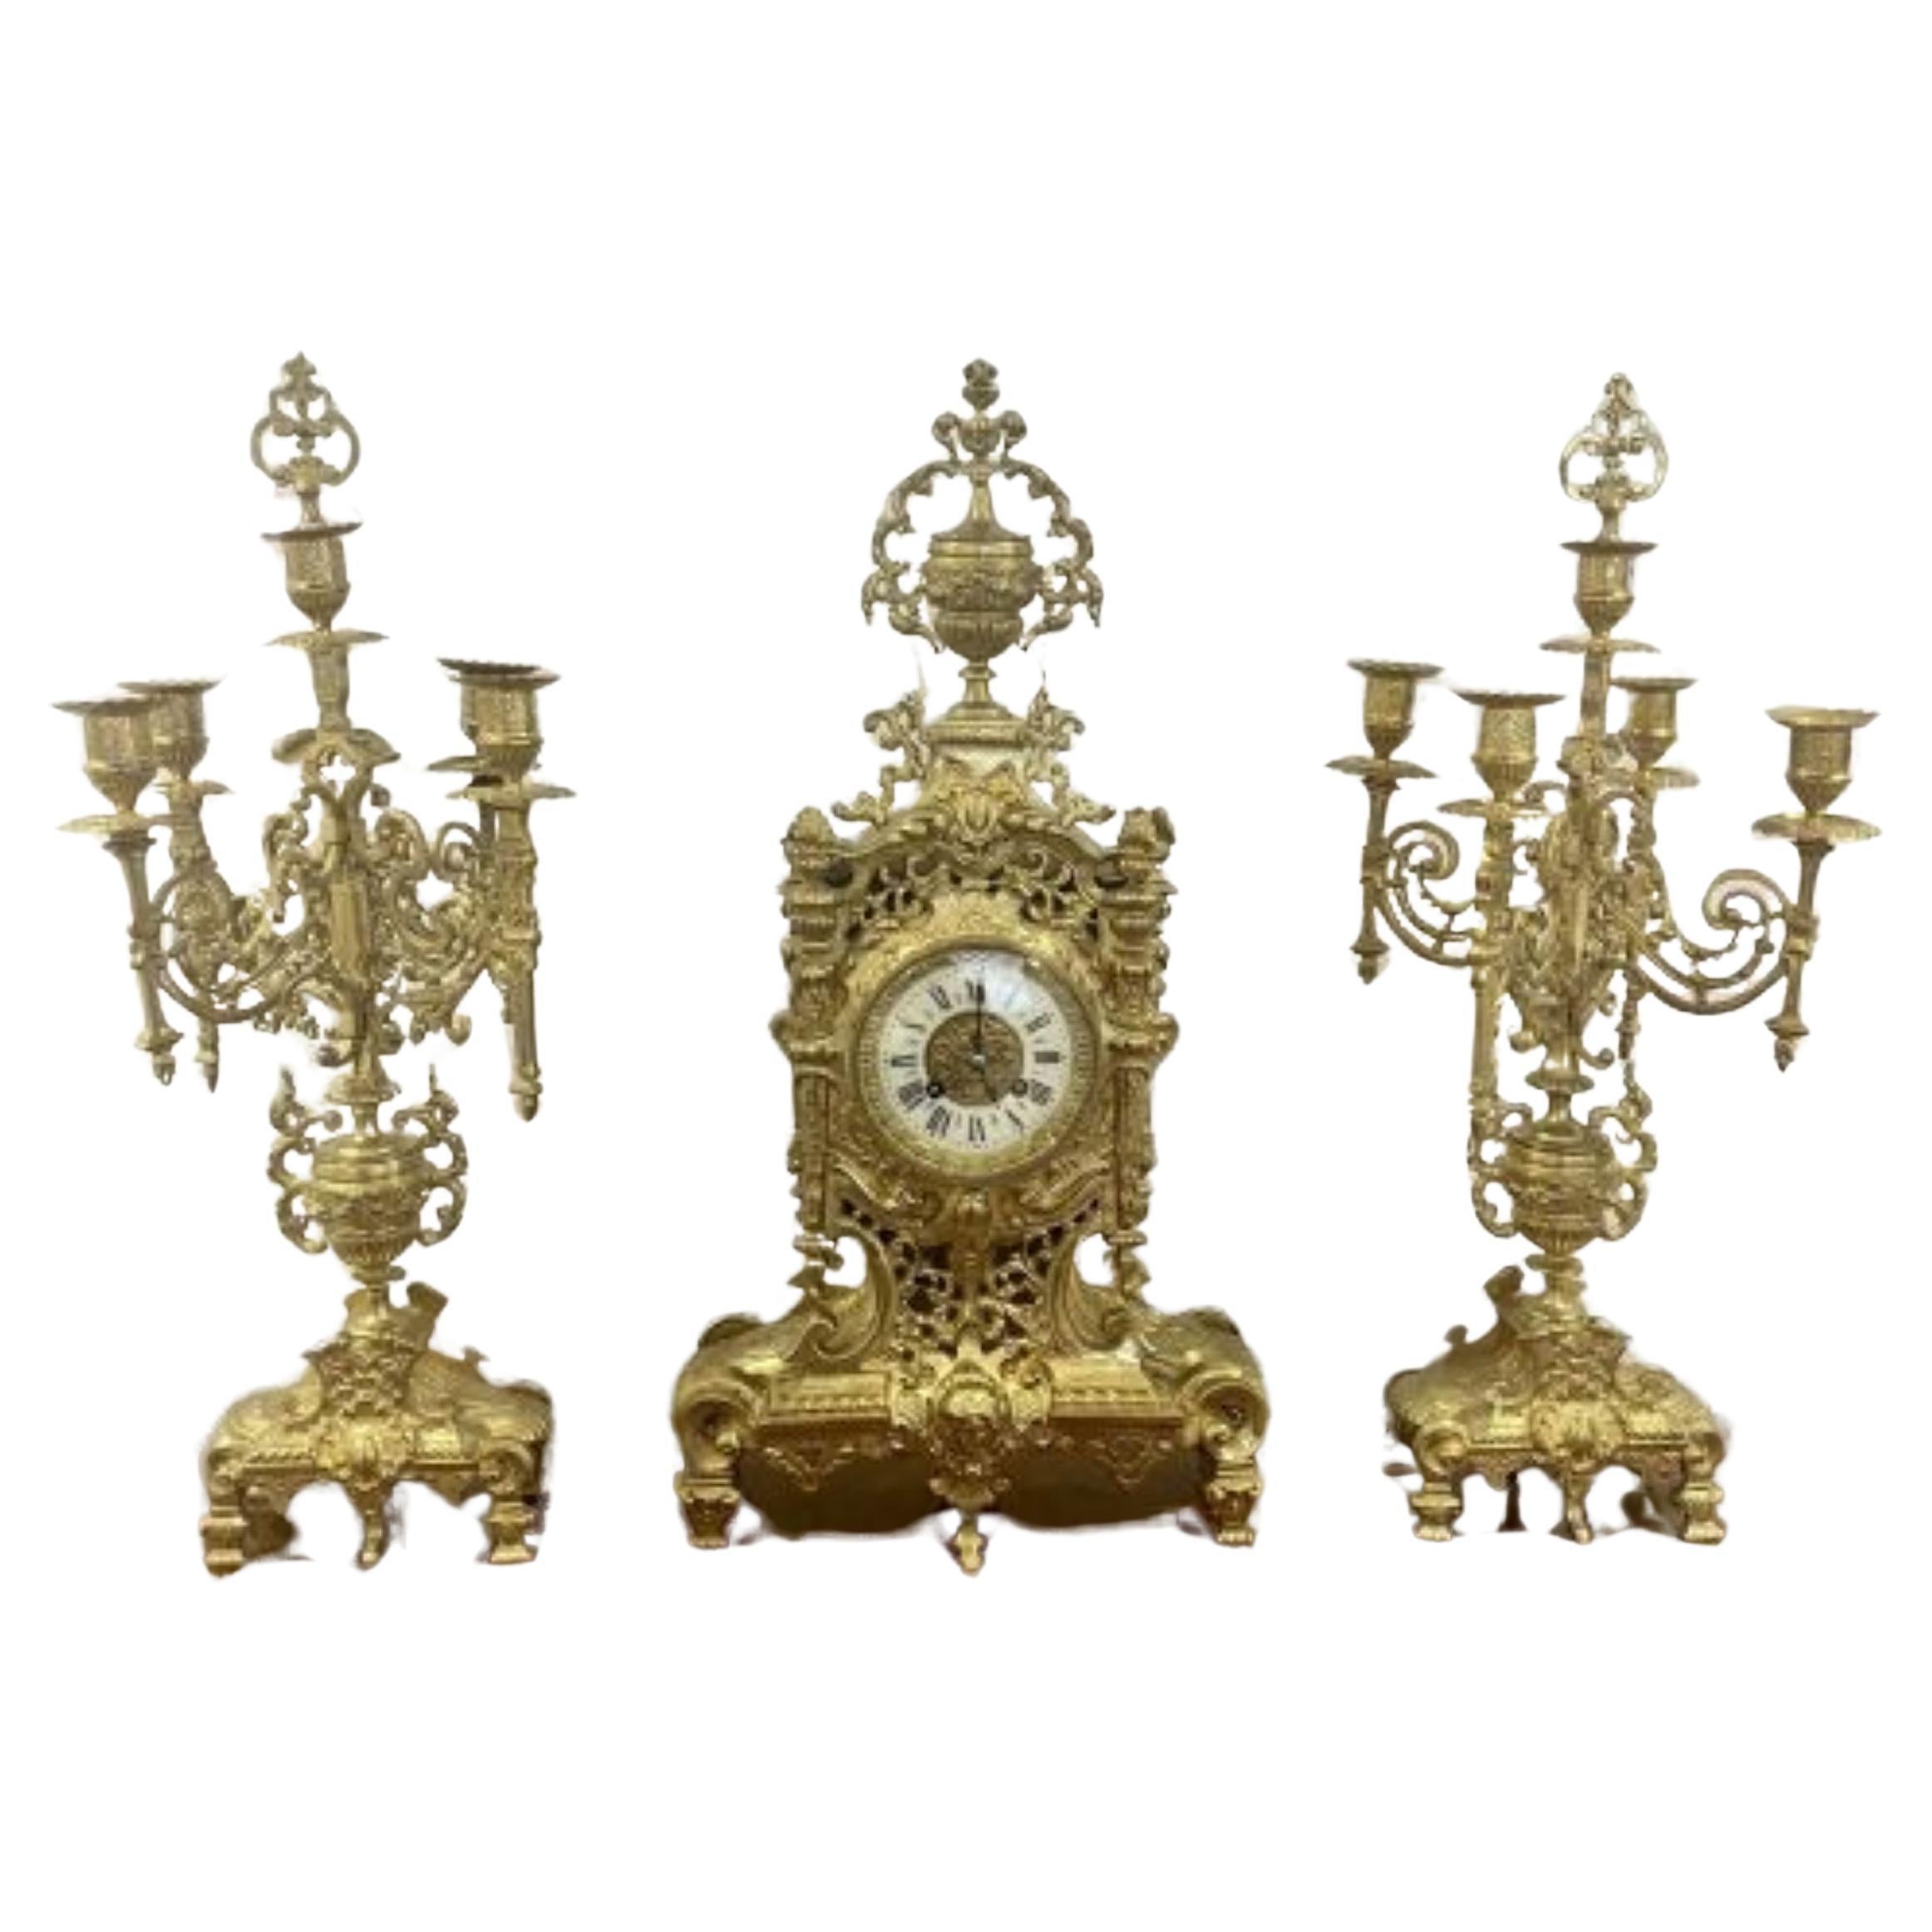 Stunning quality French antique Victorian ornate brass clock garniture 